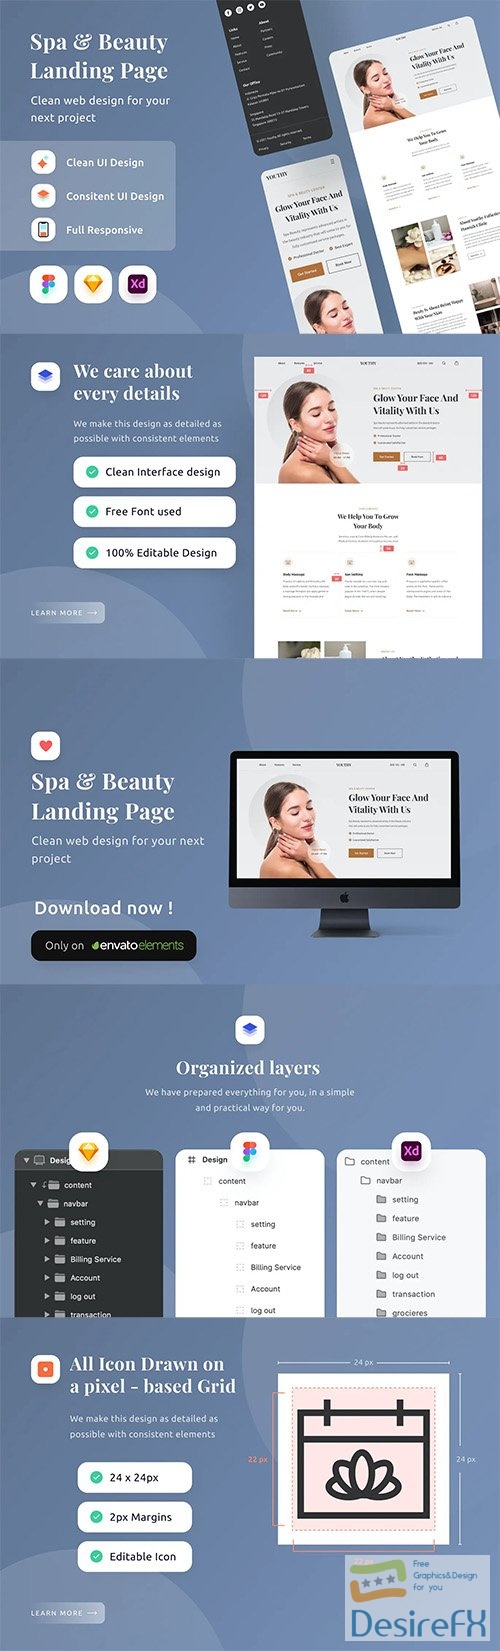 Spa & Beauty Landing Page